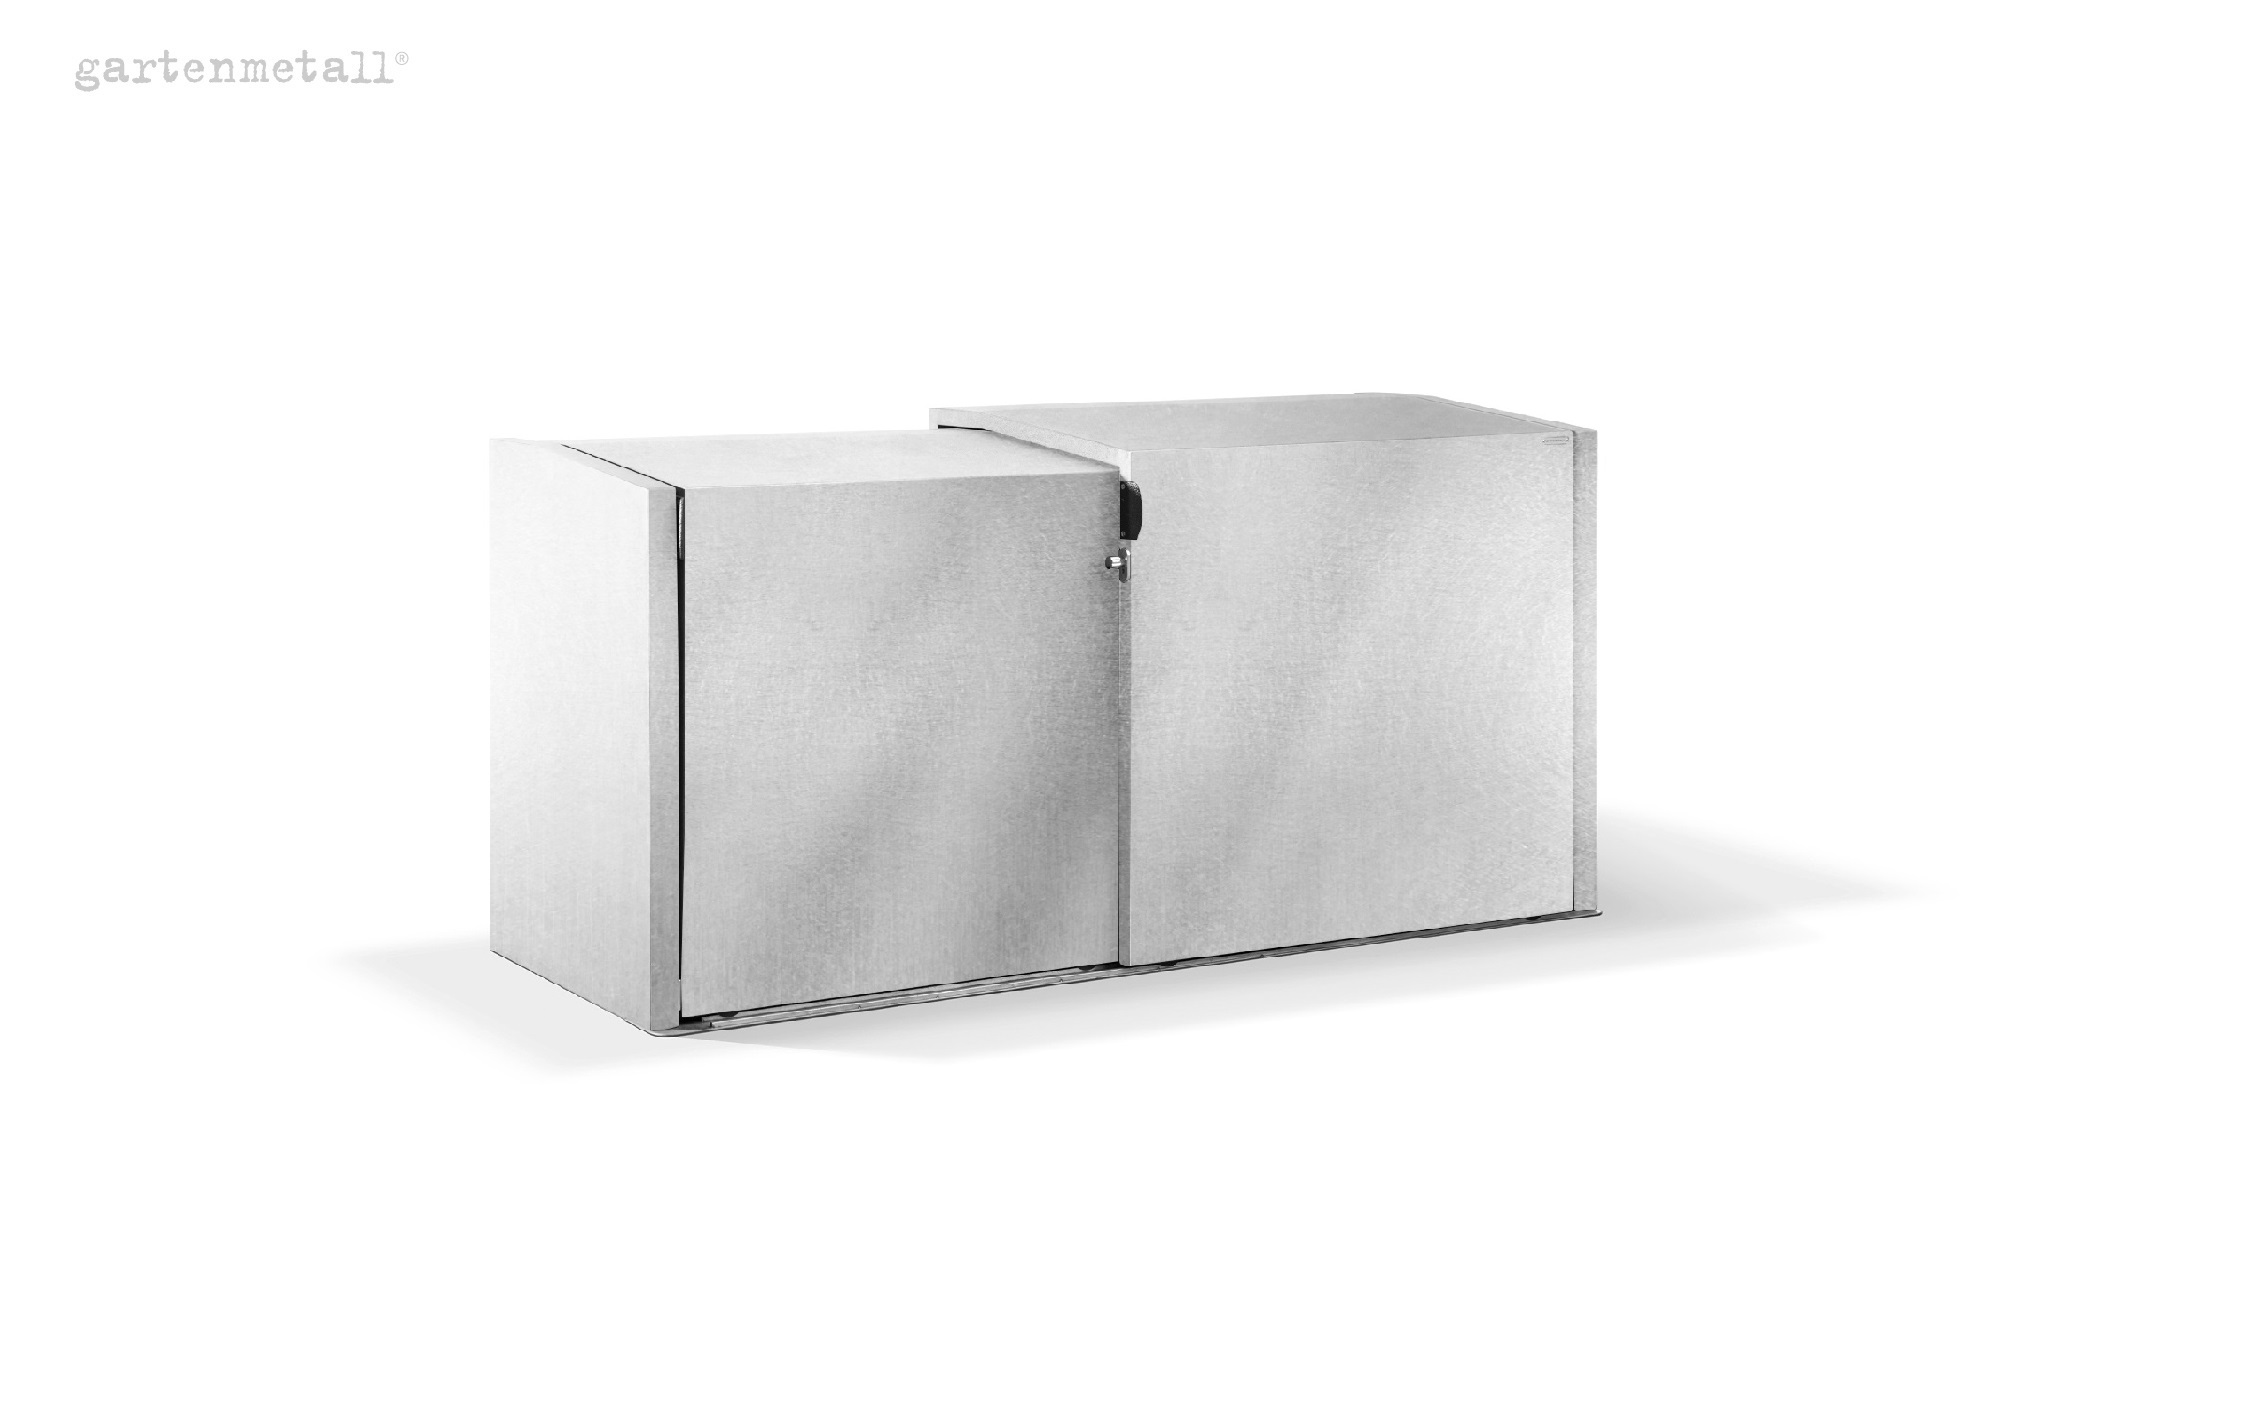 XANTEN bin box for 2 240 l bins with 2 sliding doors